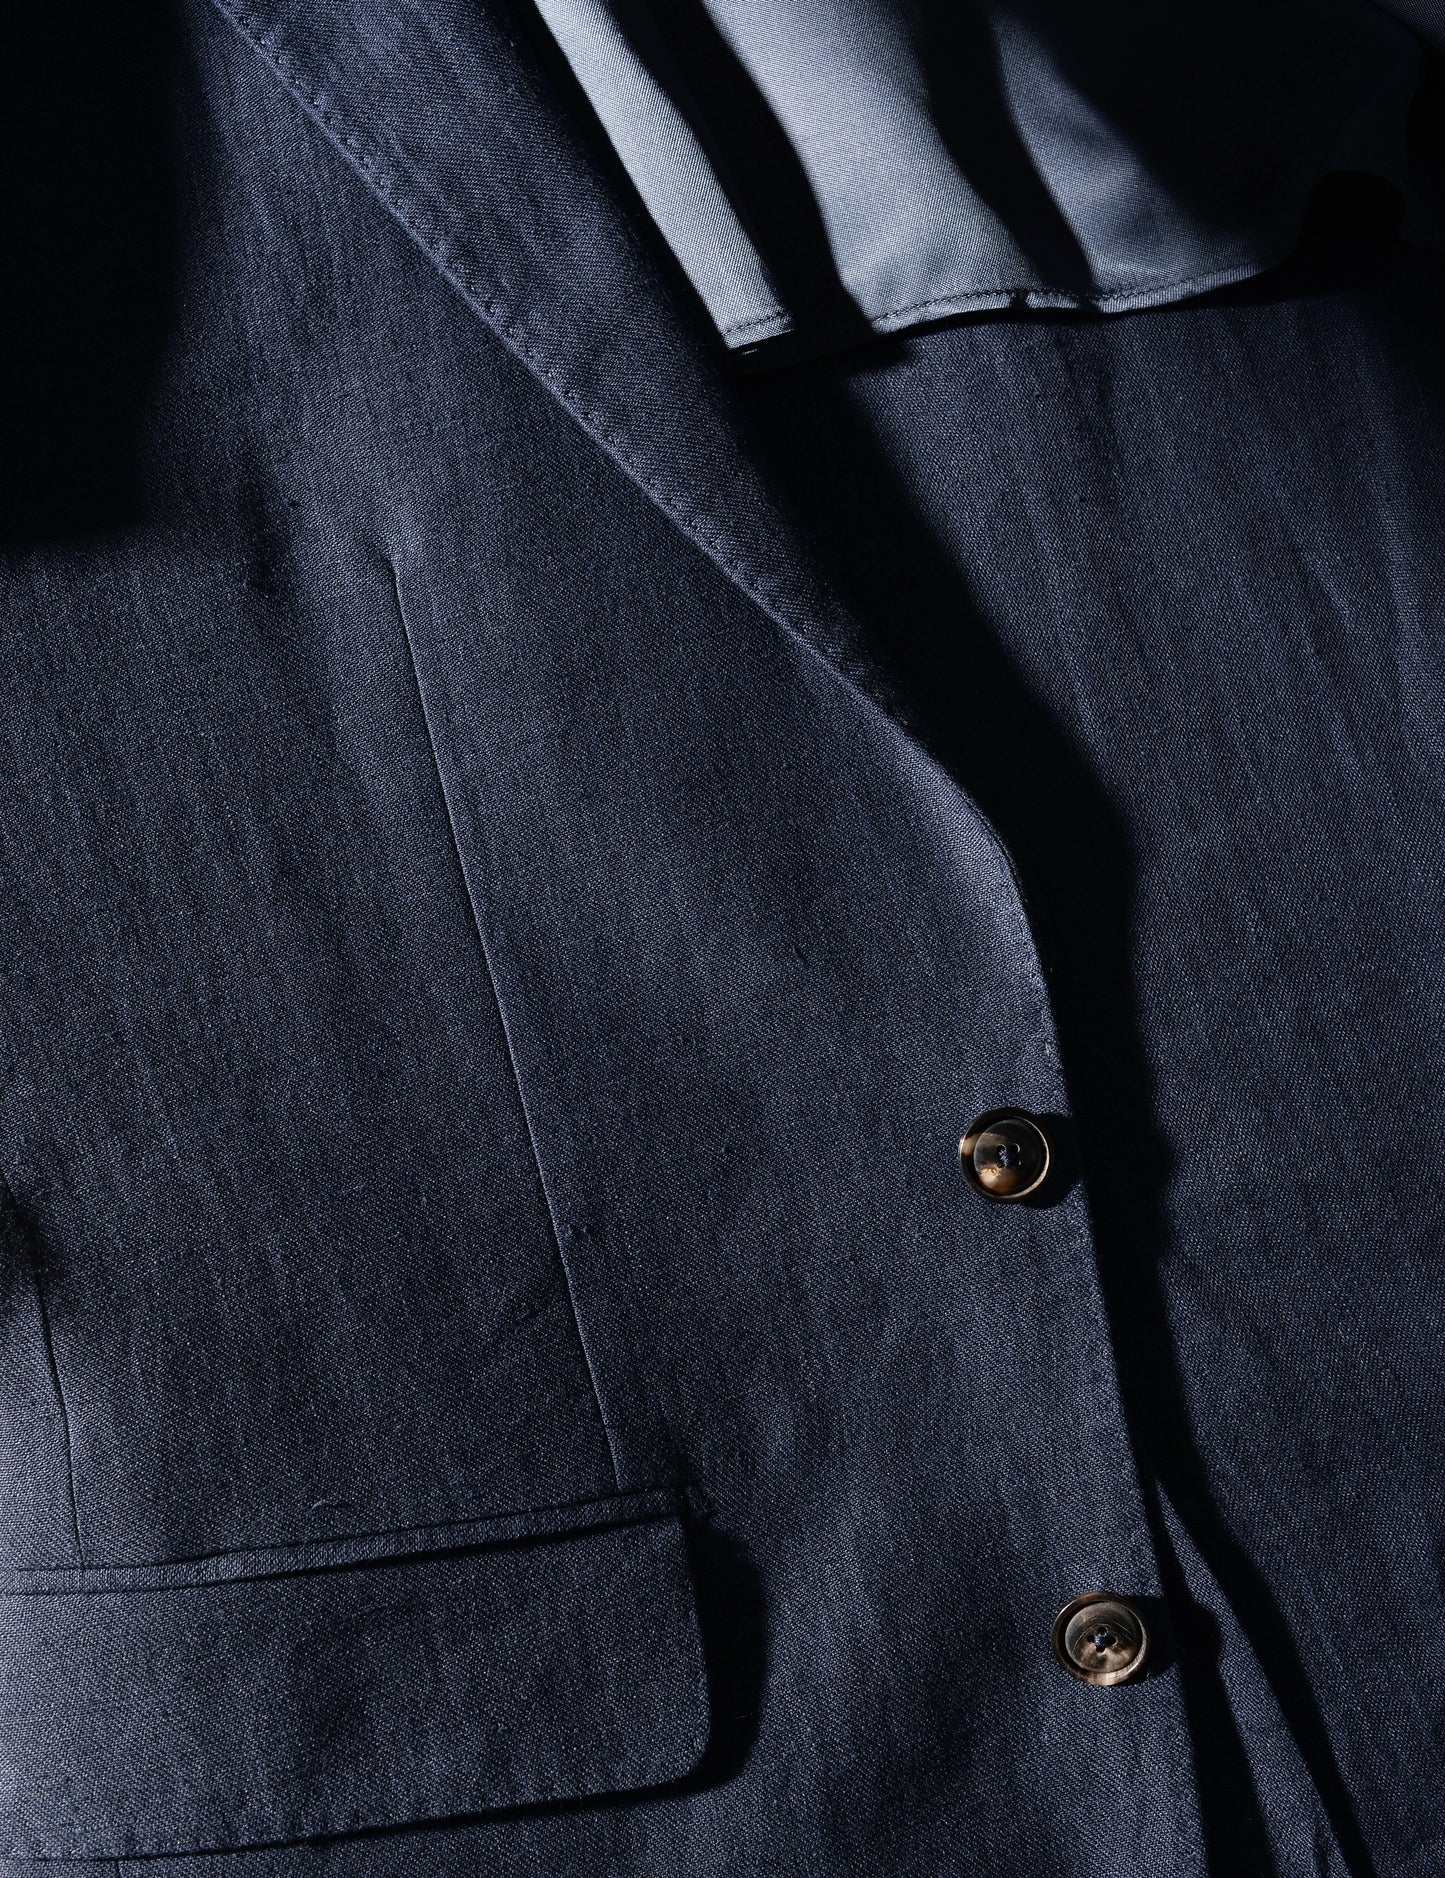 BKT50 Tailored Jacket in Linen Twill - Salerno Blue